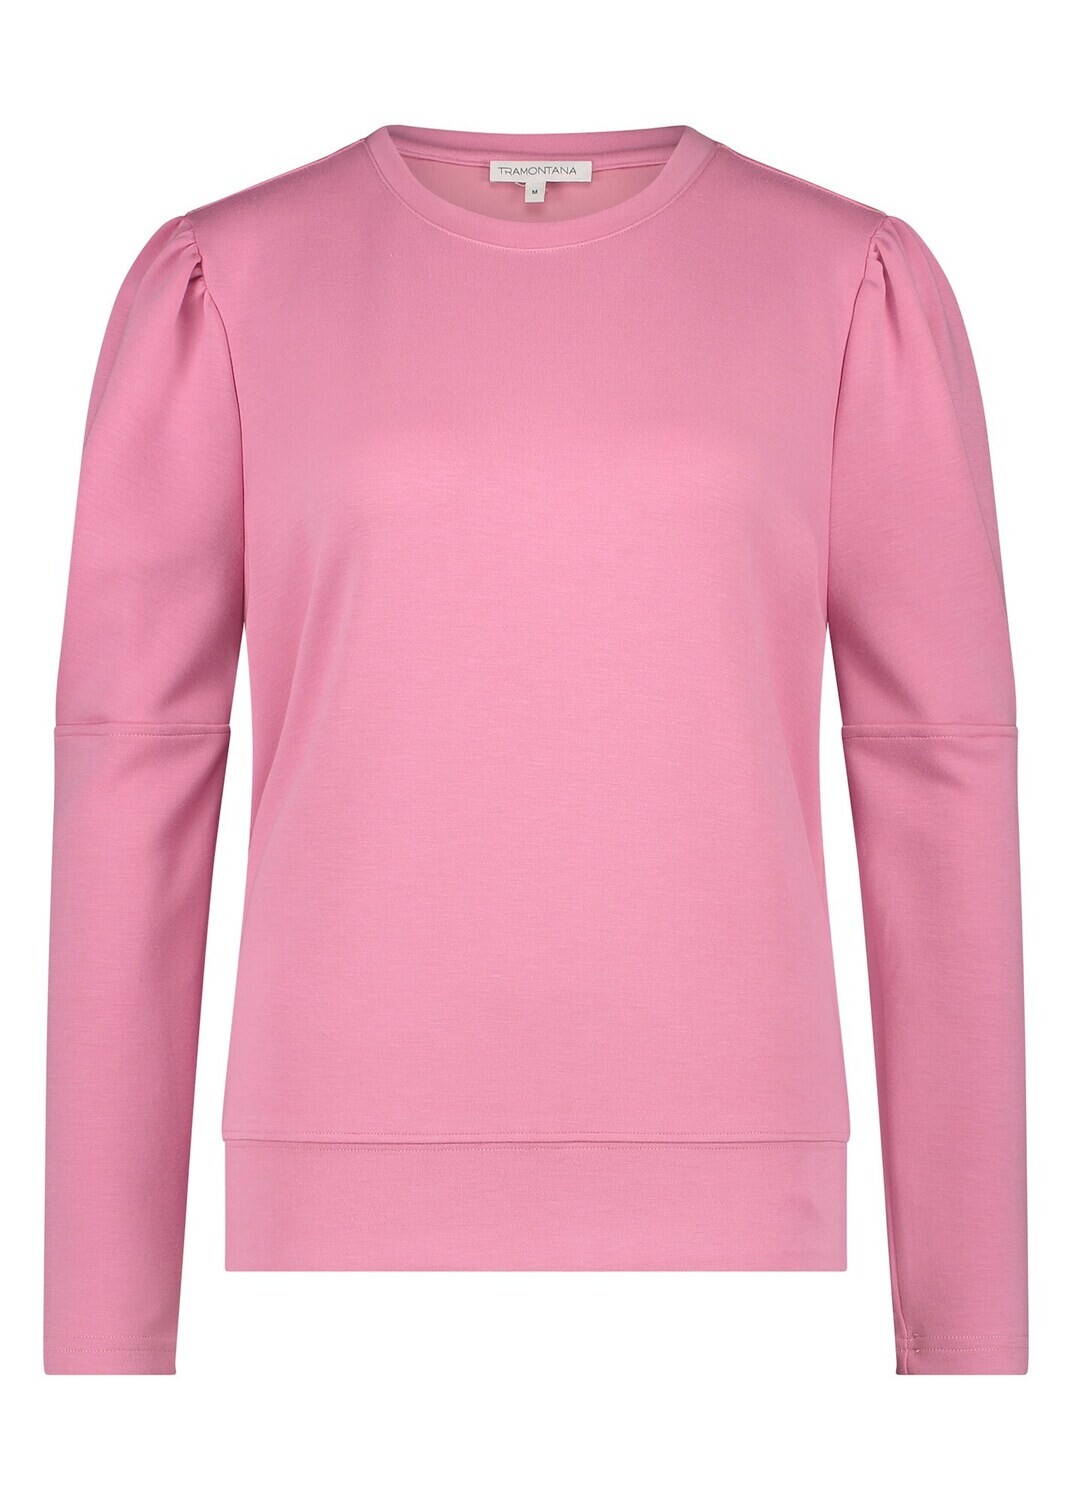 Tramontana Sweater Puff Sleeve Rose C15-11-601